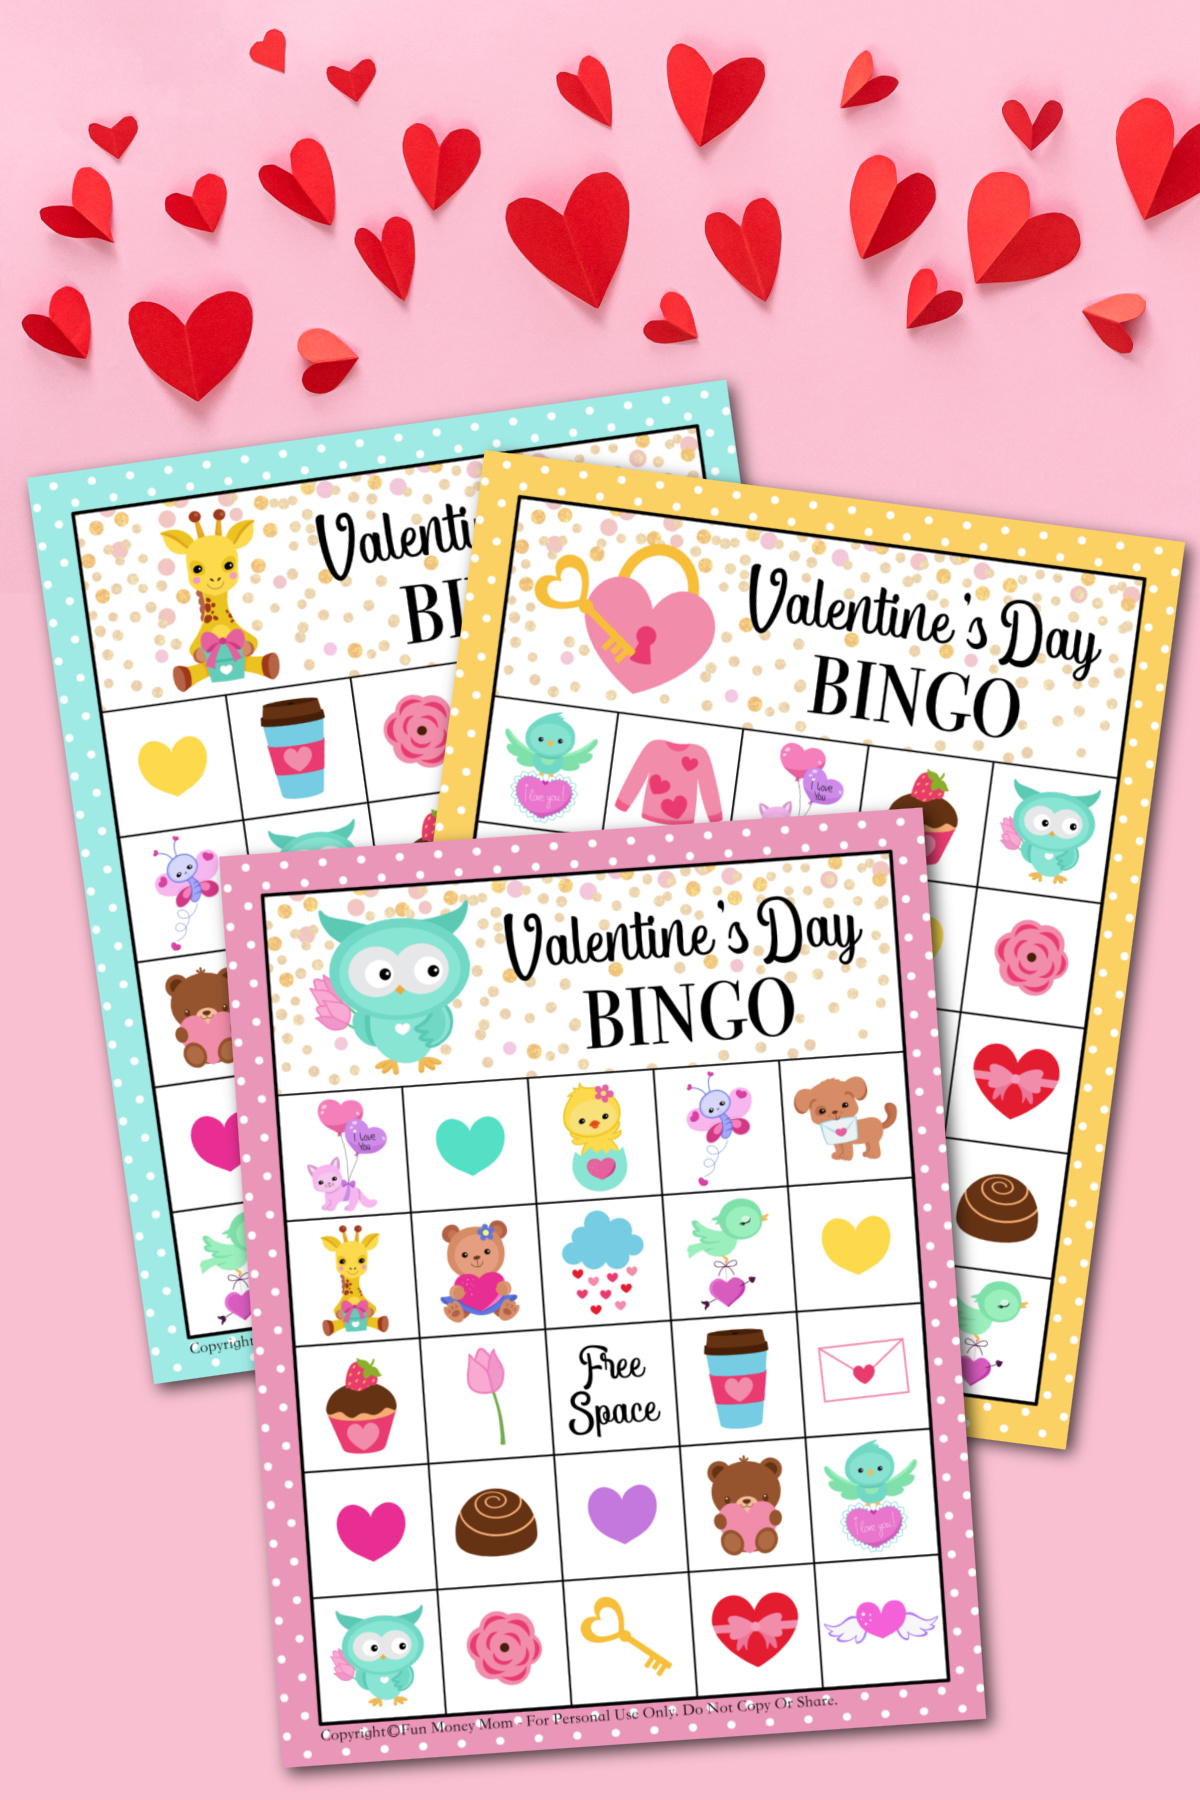 Printable valentine's day bingo cards.